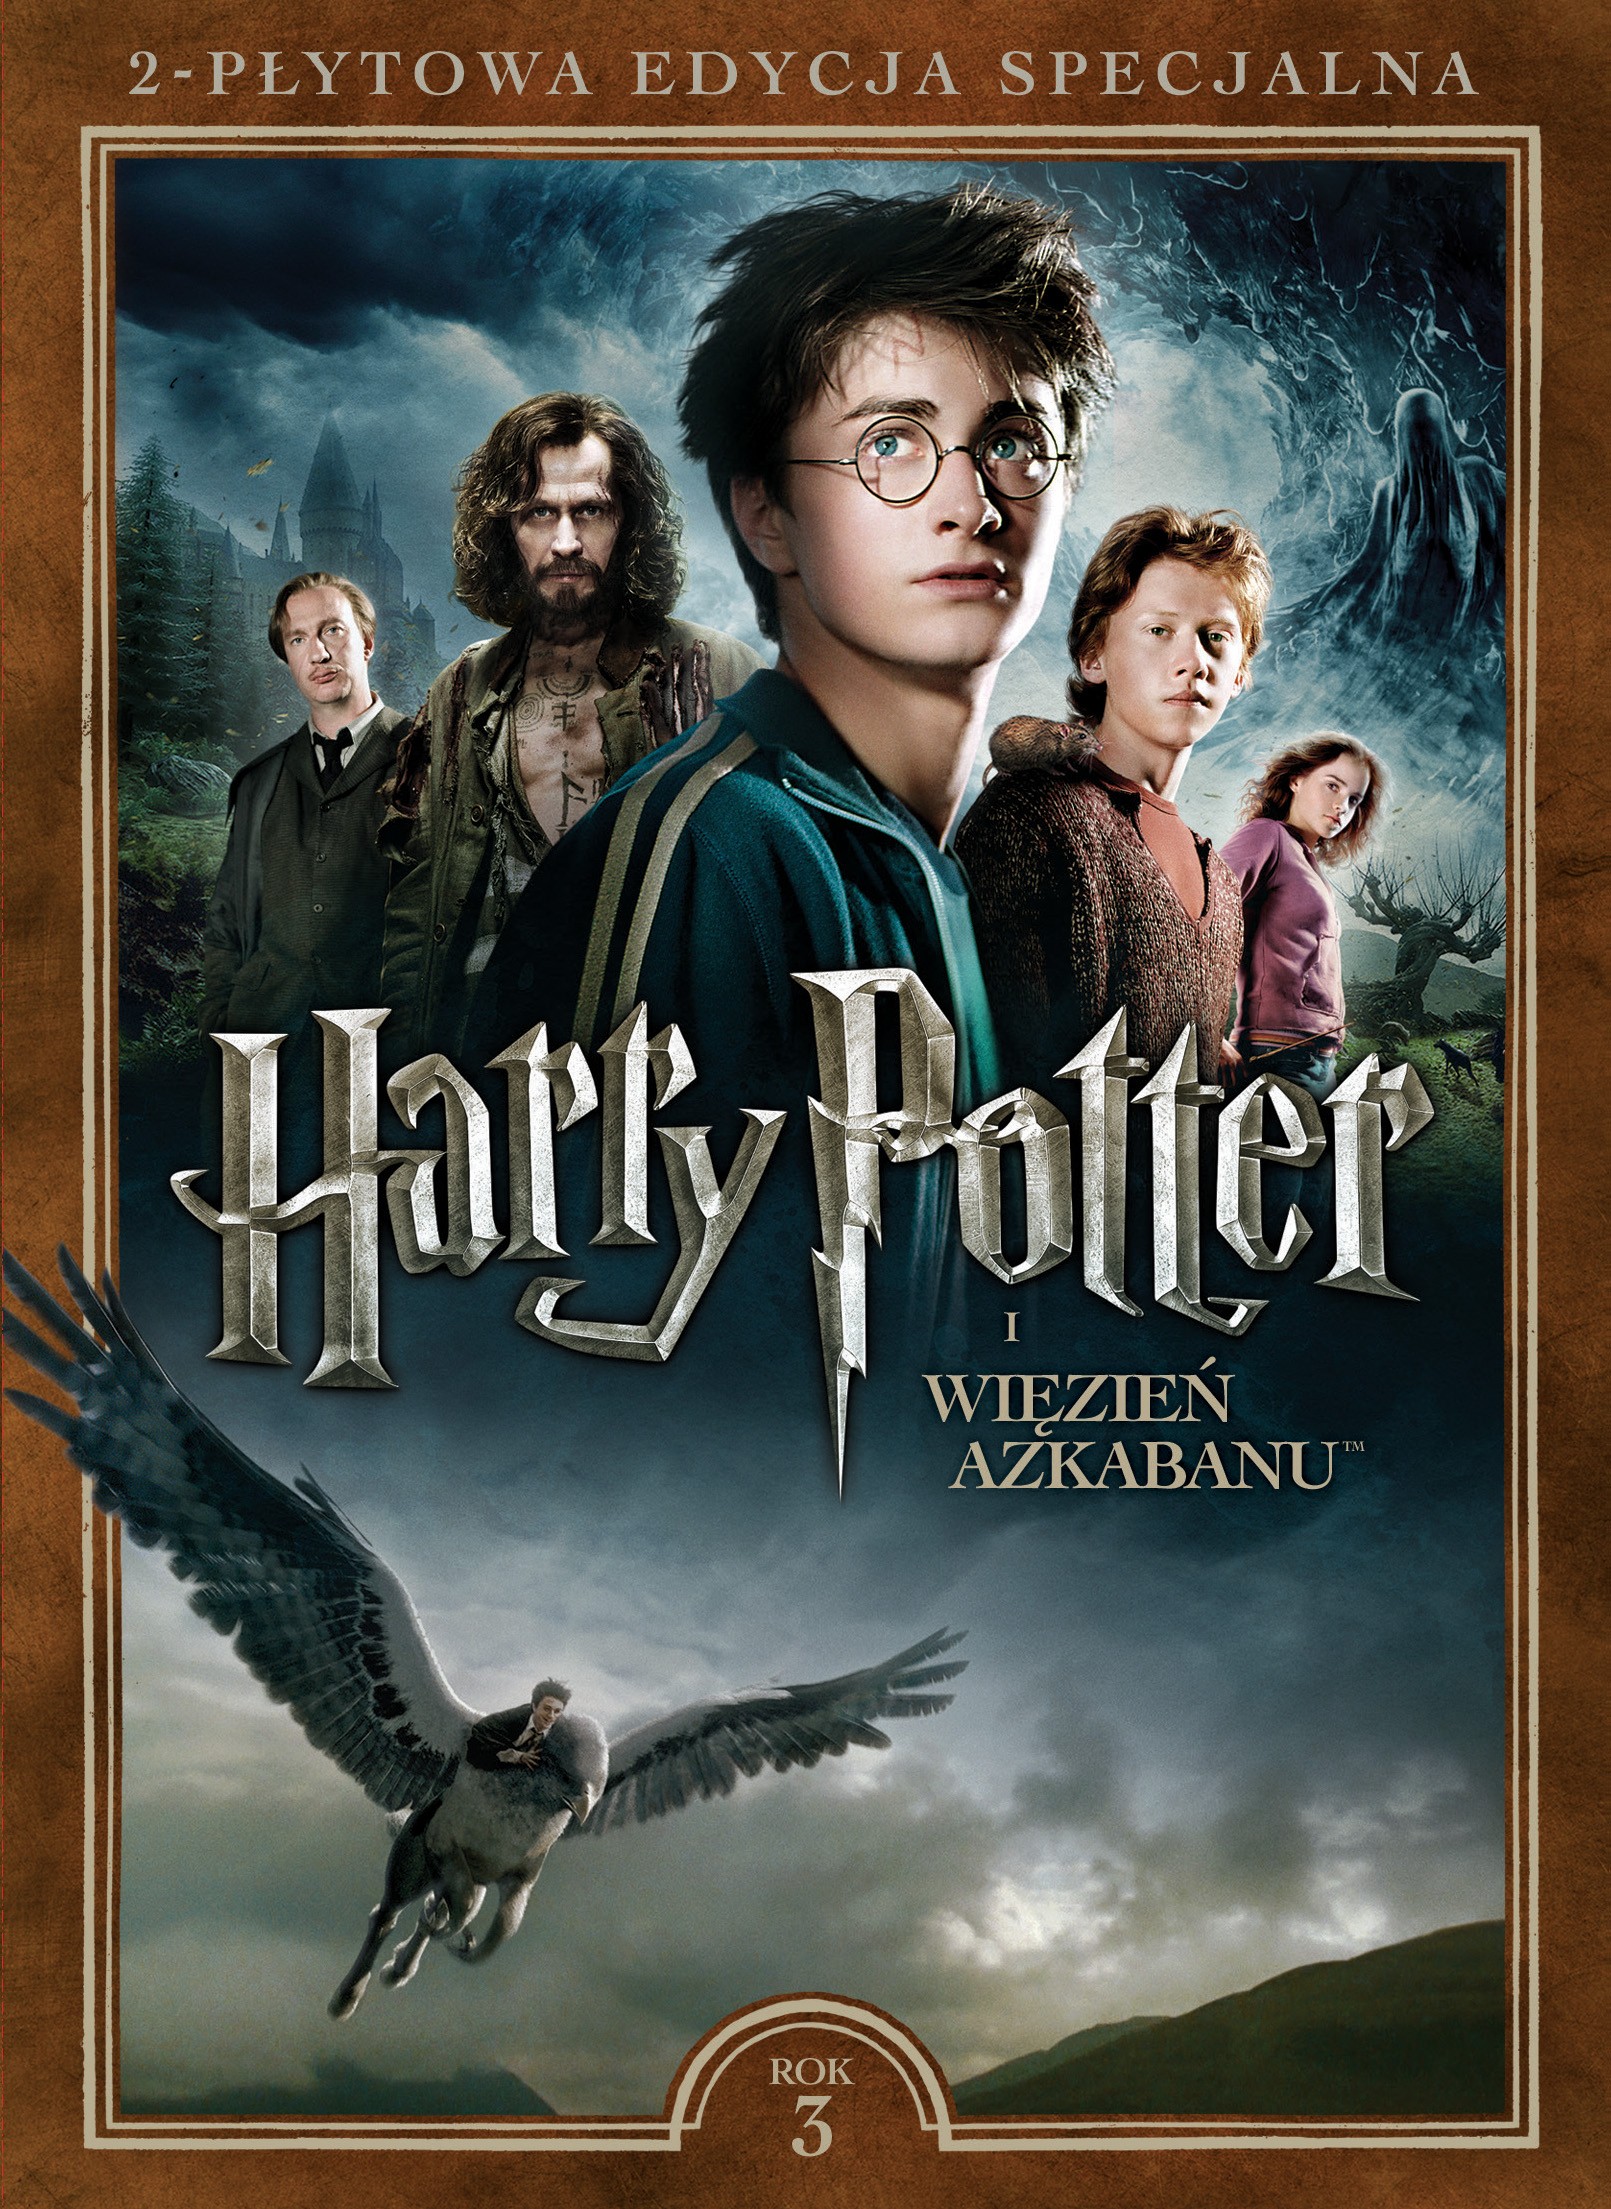 _pressroom_materialy_1_Harry_Potter3_DVD_2D.jpg